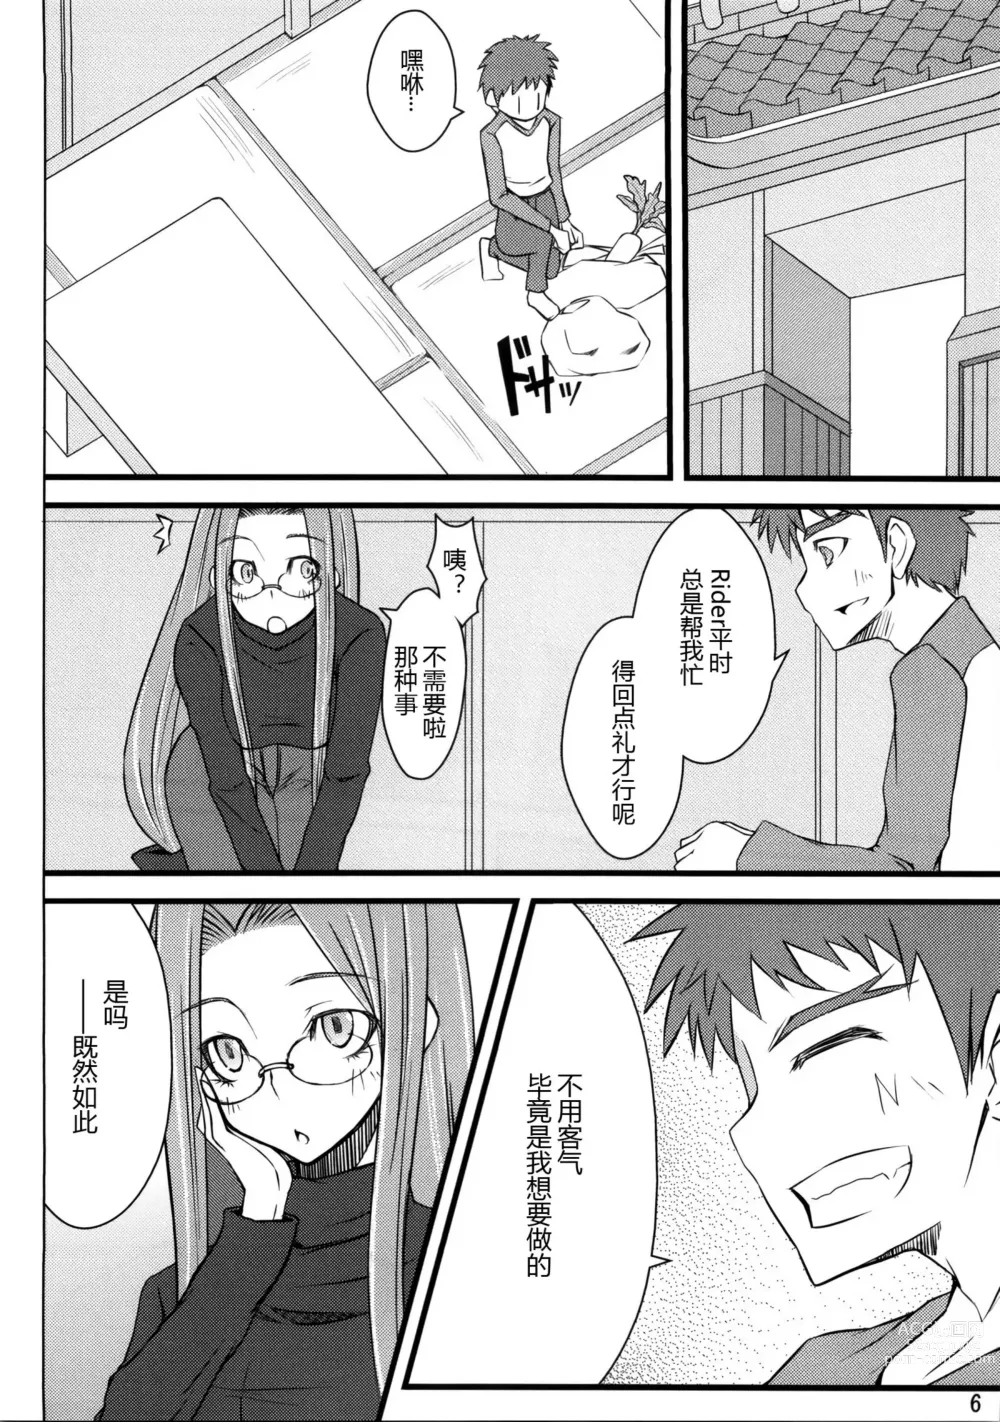 Page 6 of doujinshi R3